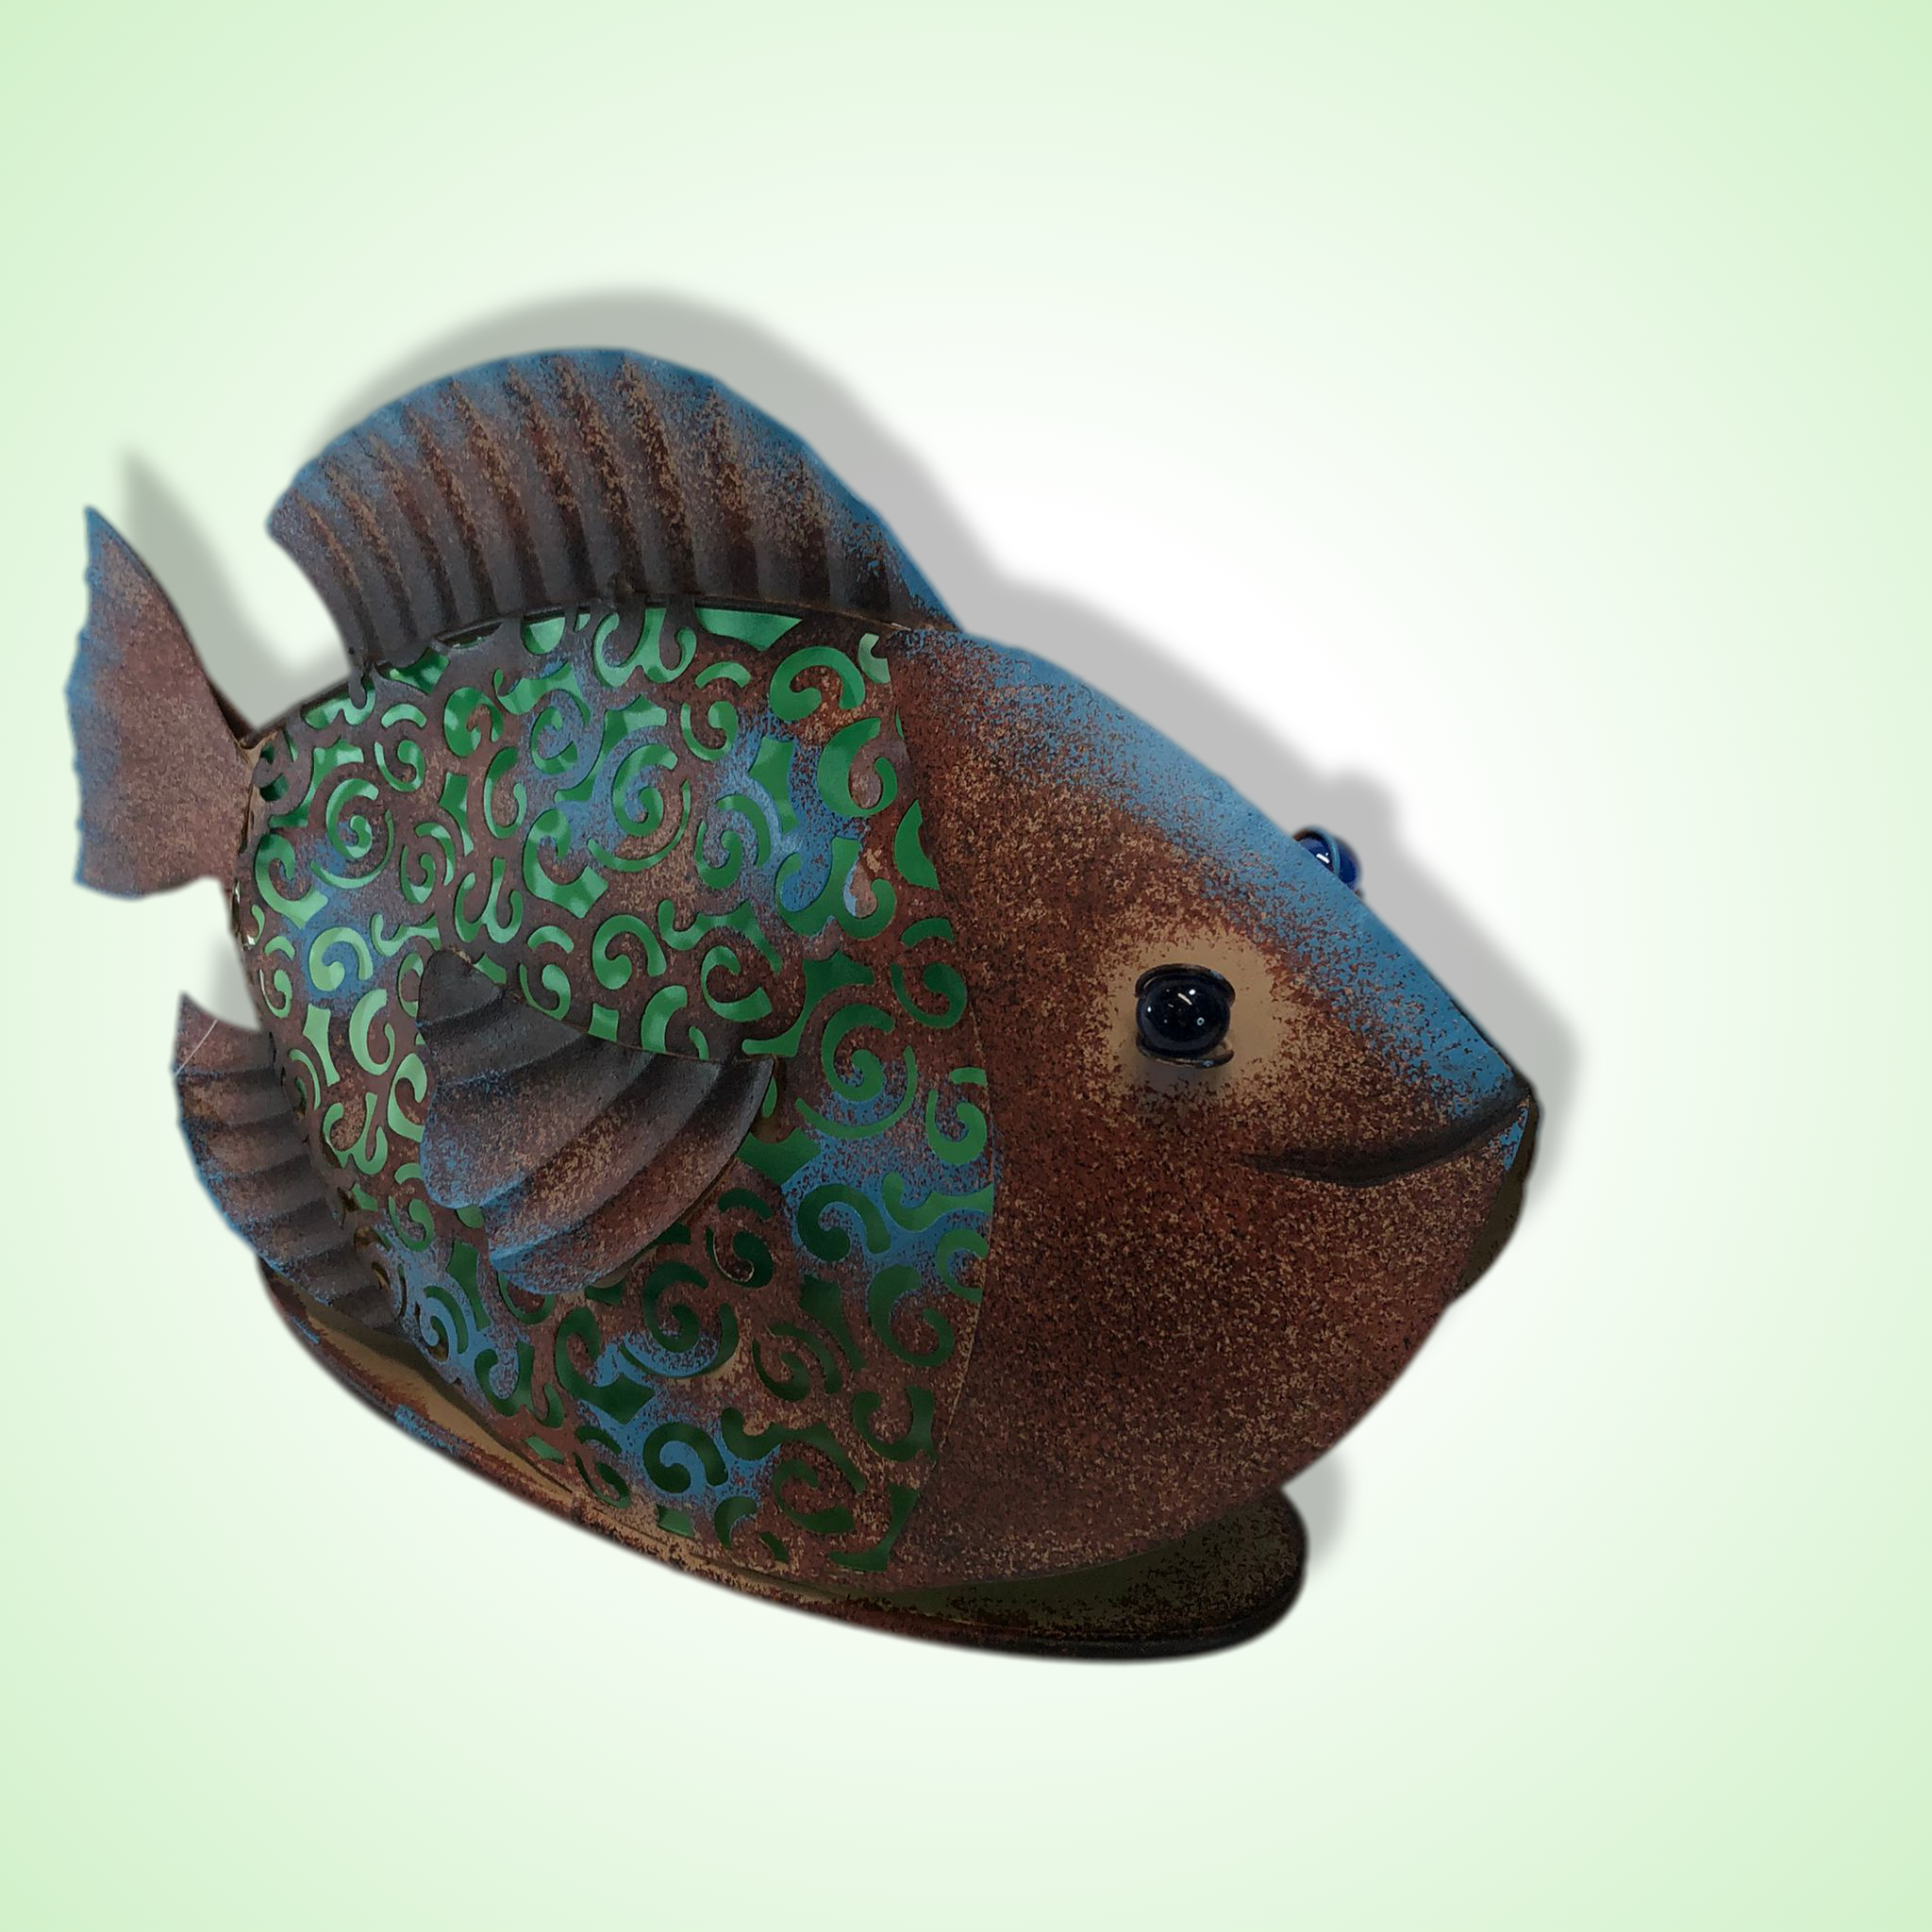 Copper Solar Fish Light - Rustic Garden Decor from Ultimate Innovations